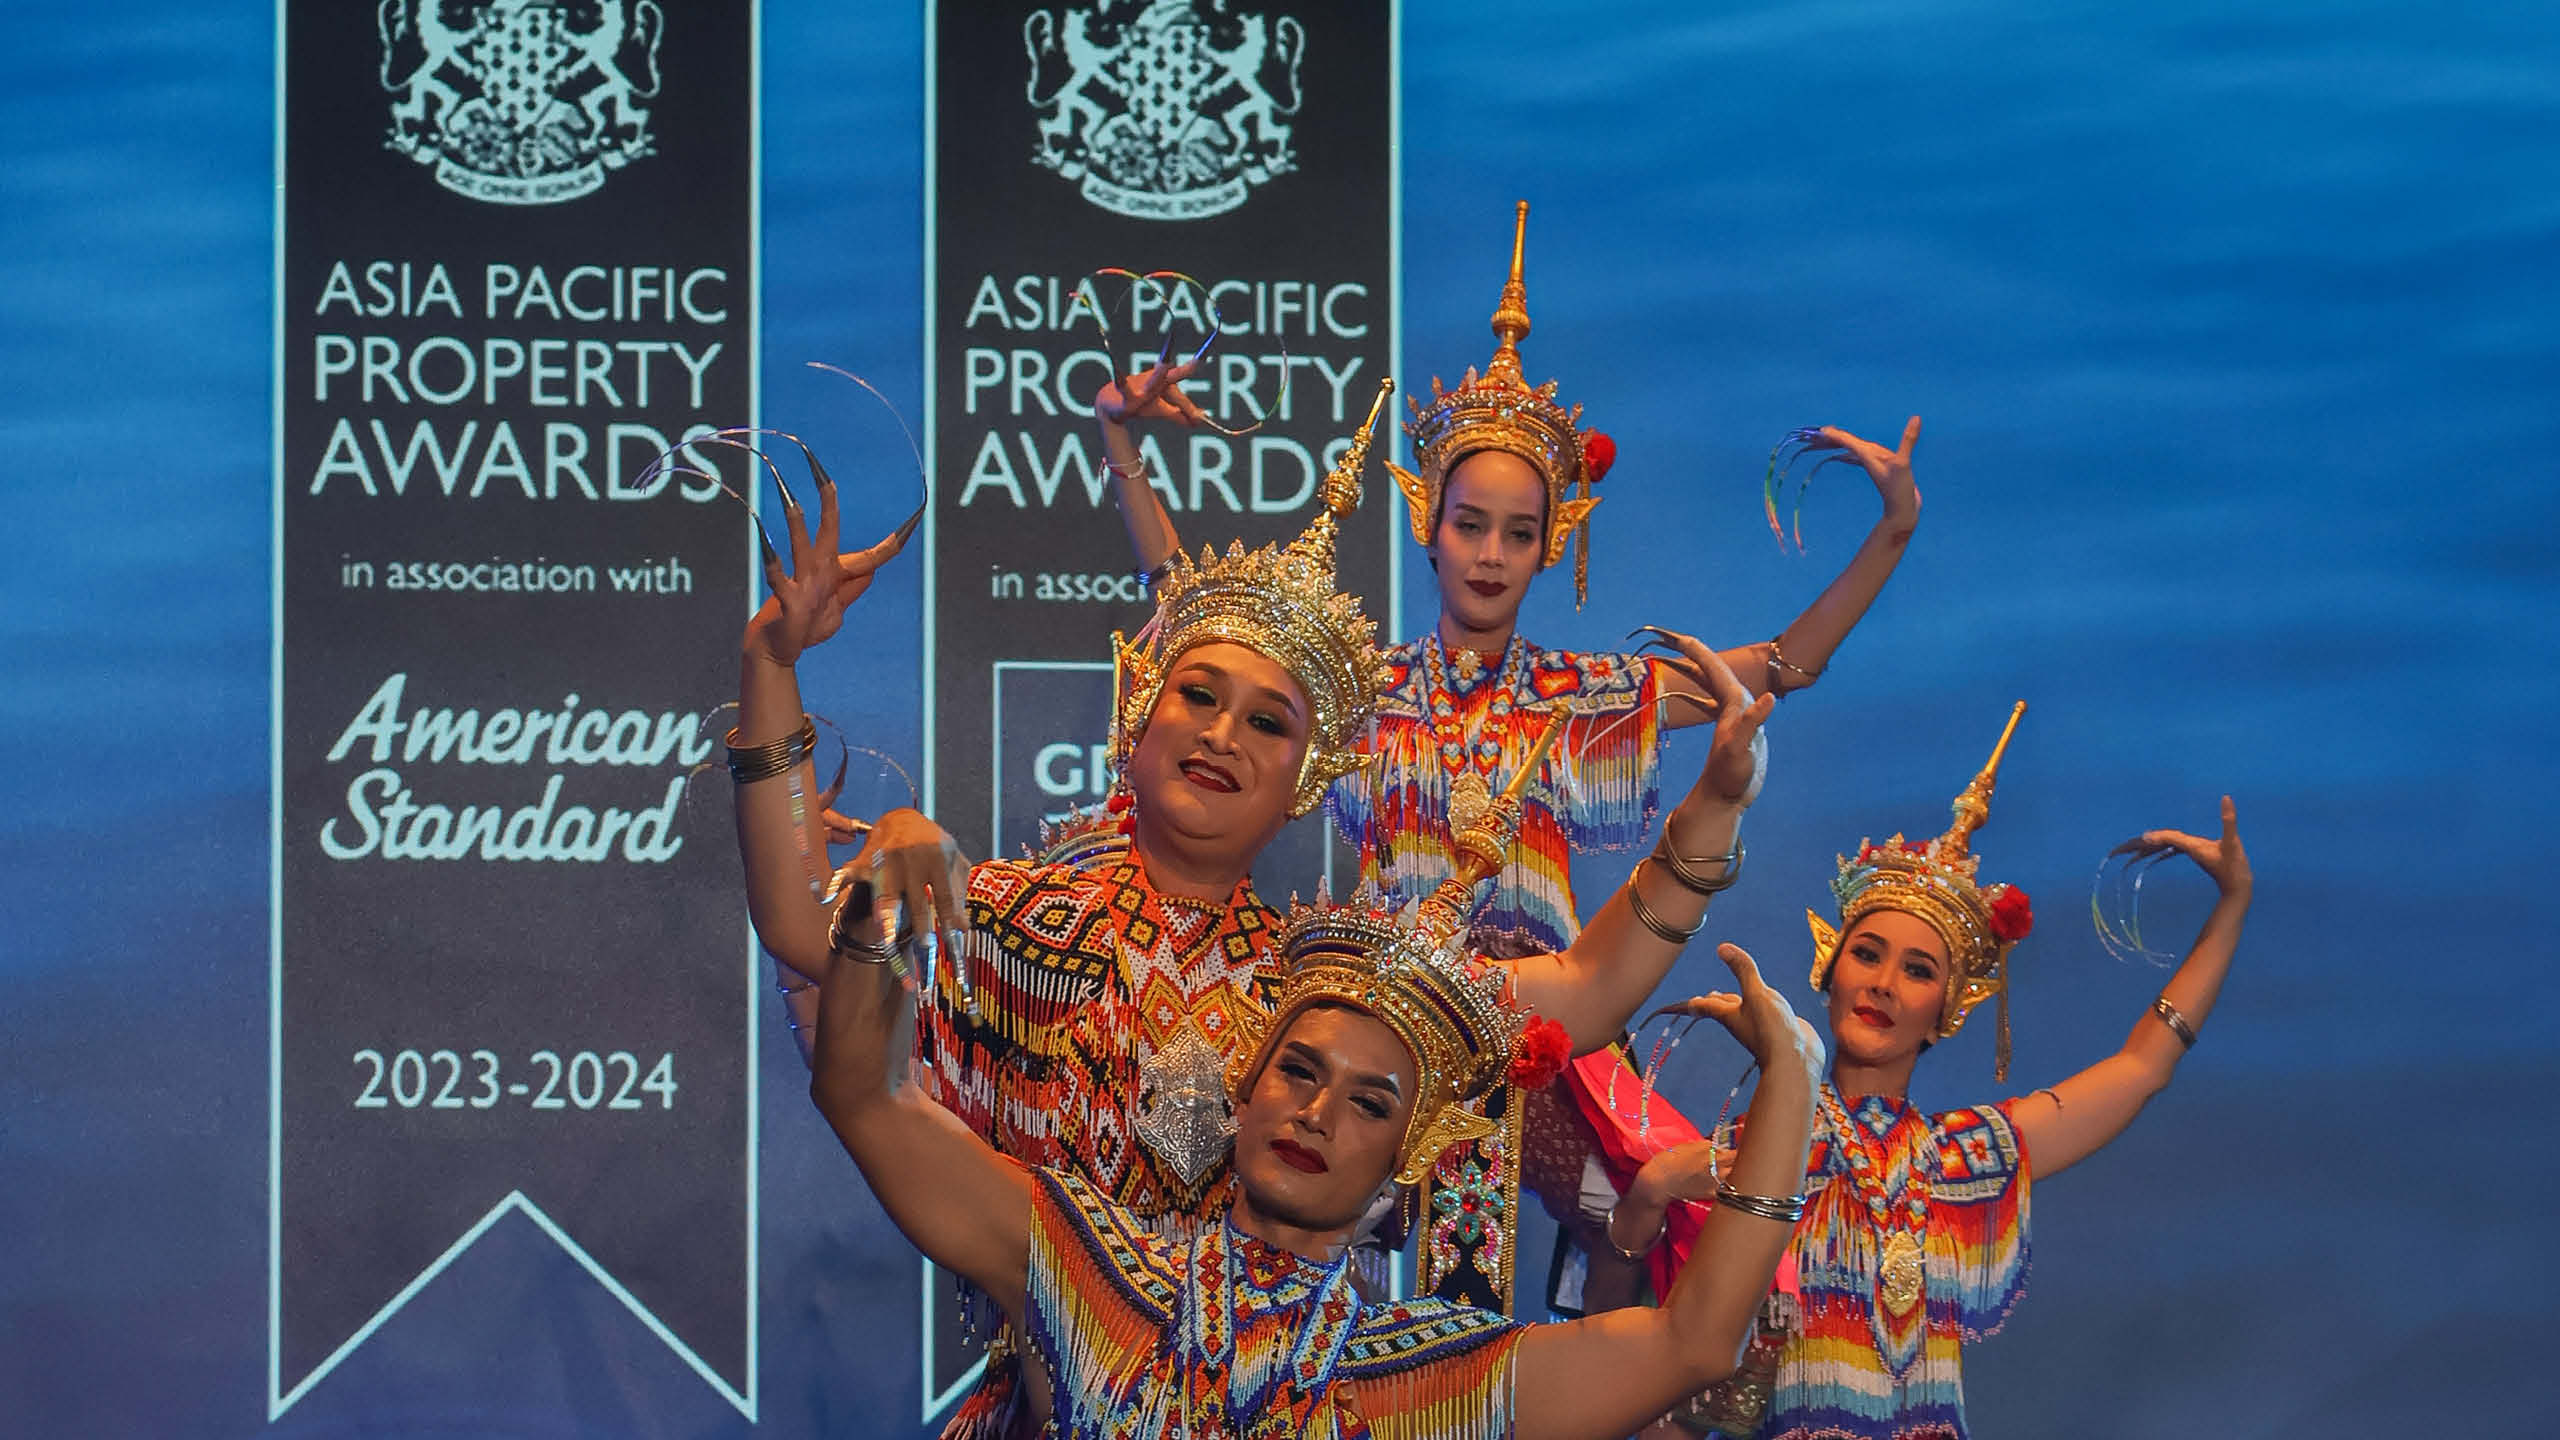 Asia Pacific Property Awards 2023-24 Held in Bangkok